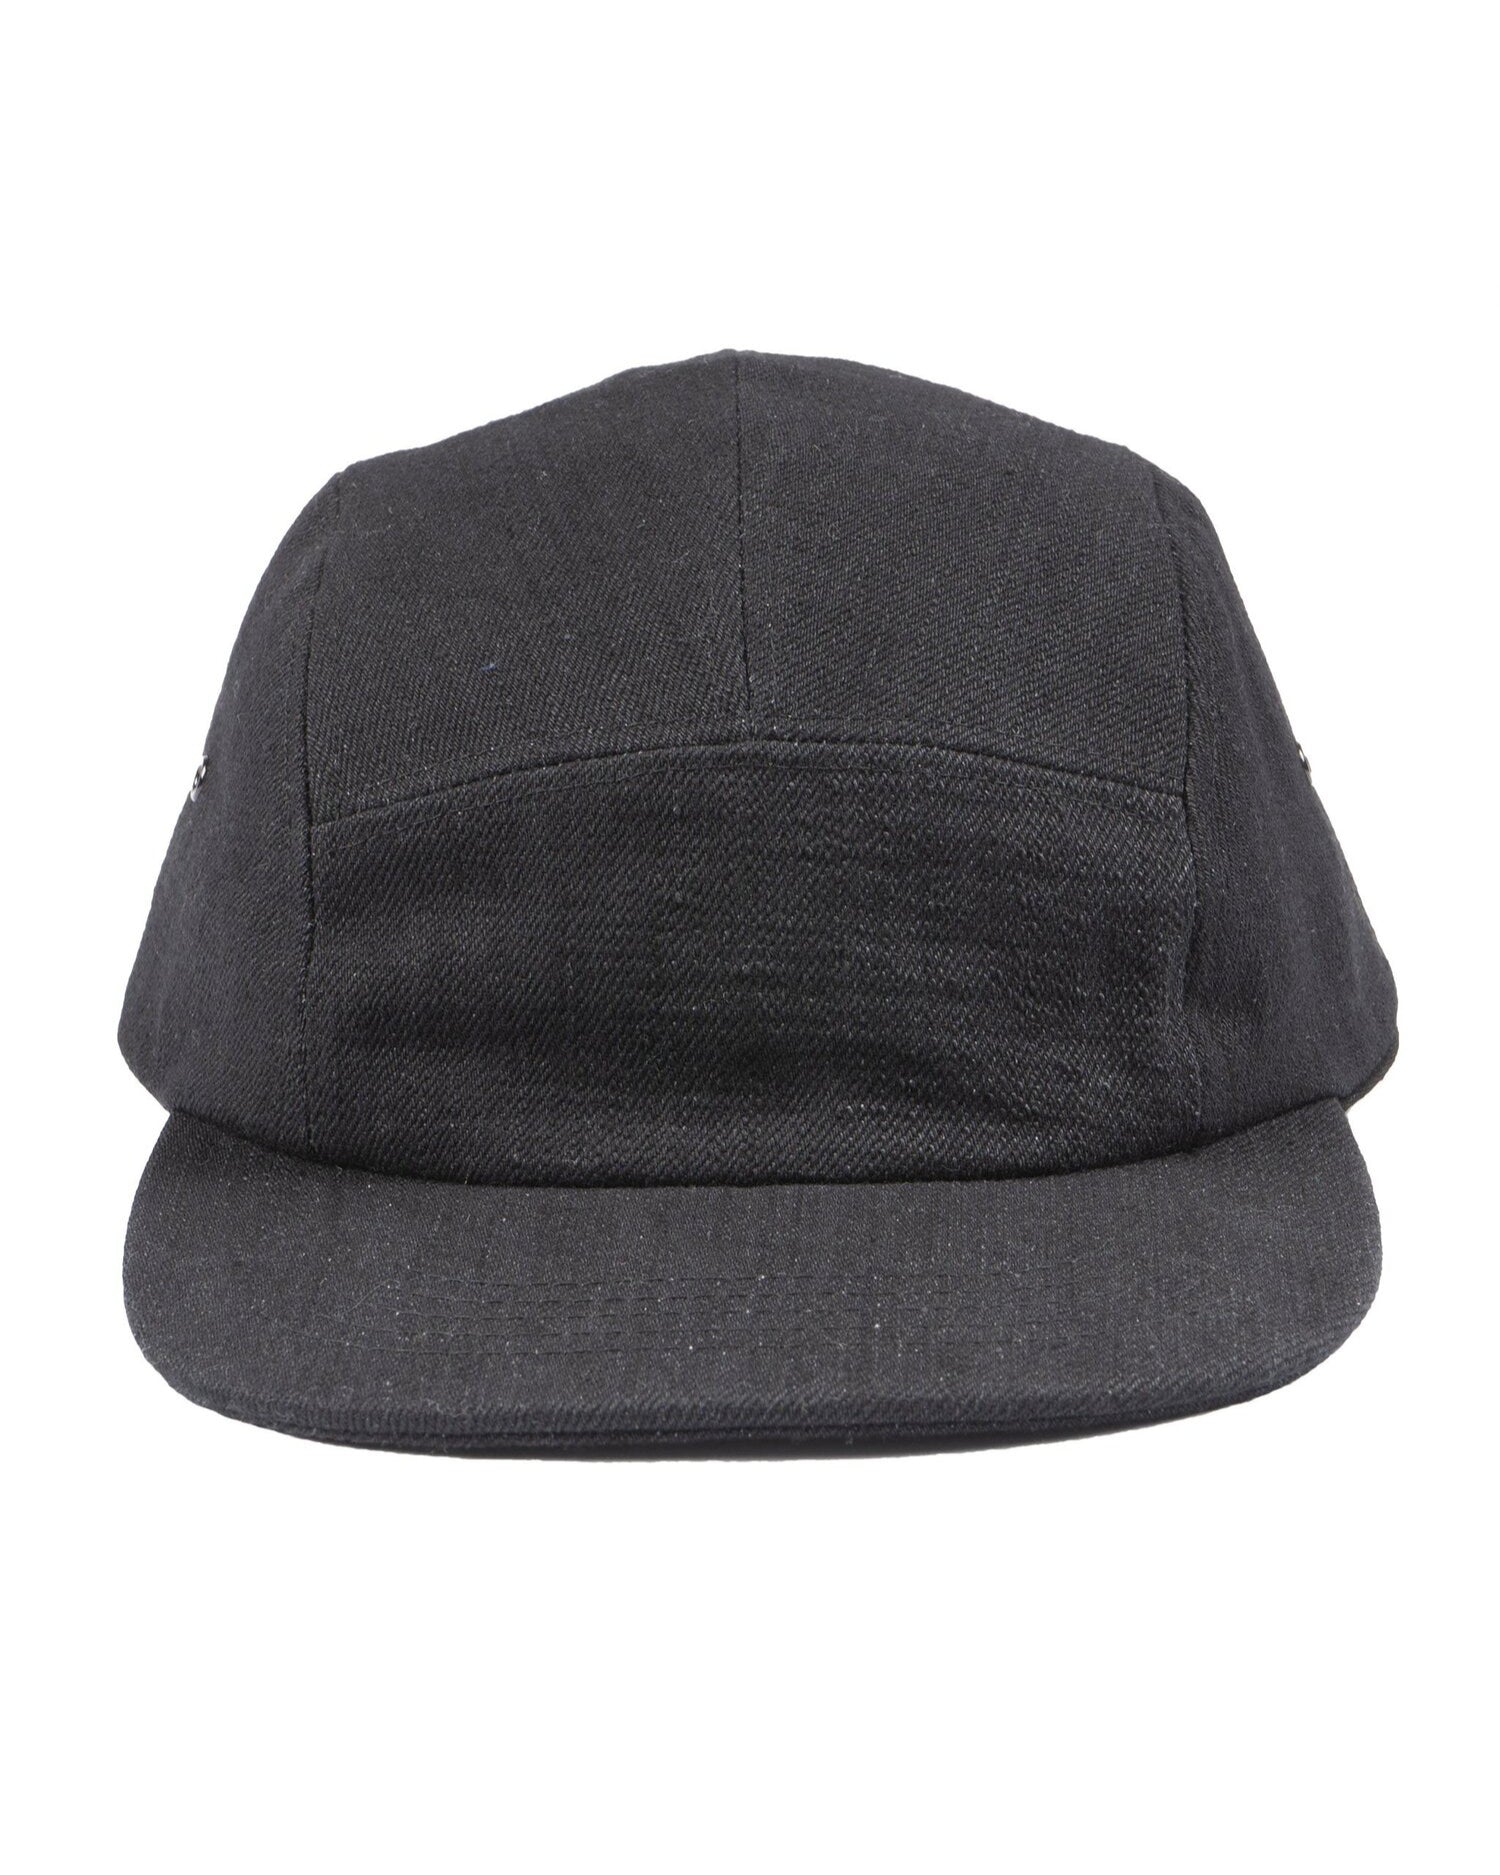 Classic Cap - Japan Heritage Unsanforized Selvedge - Black